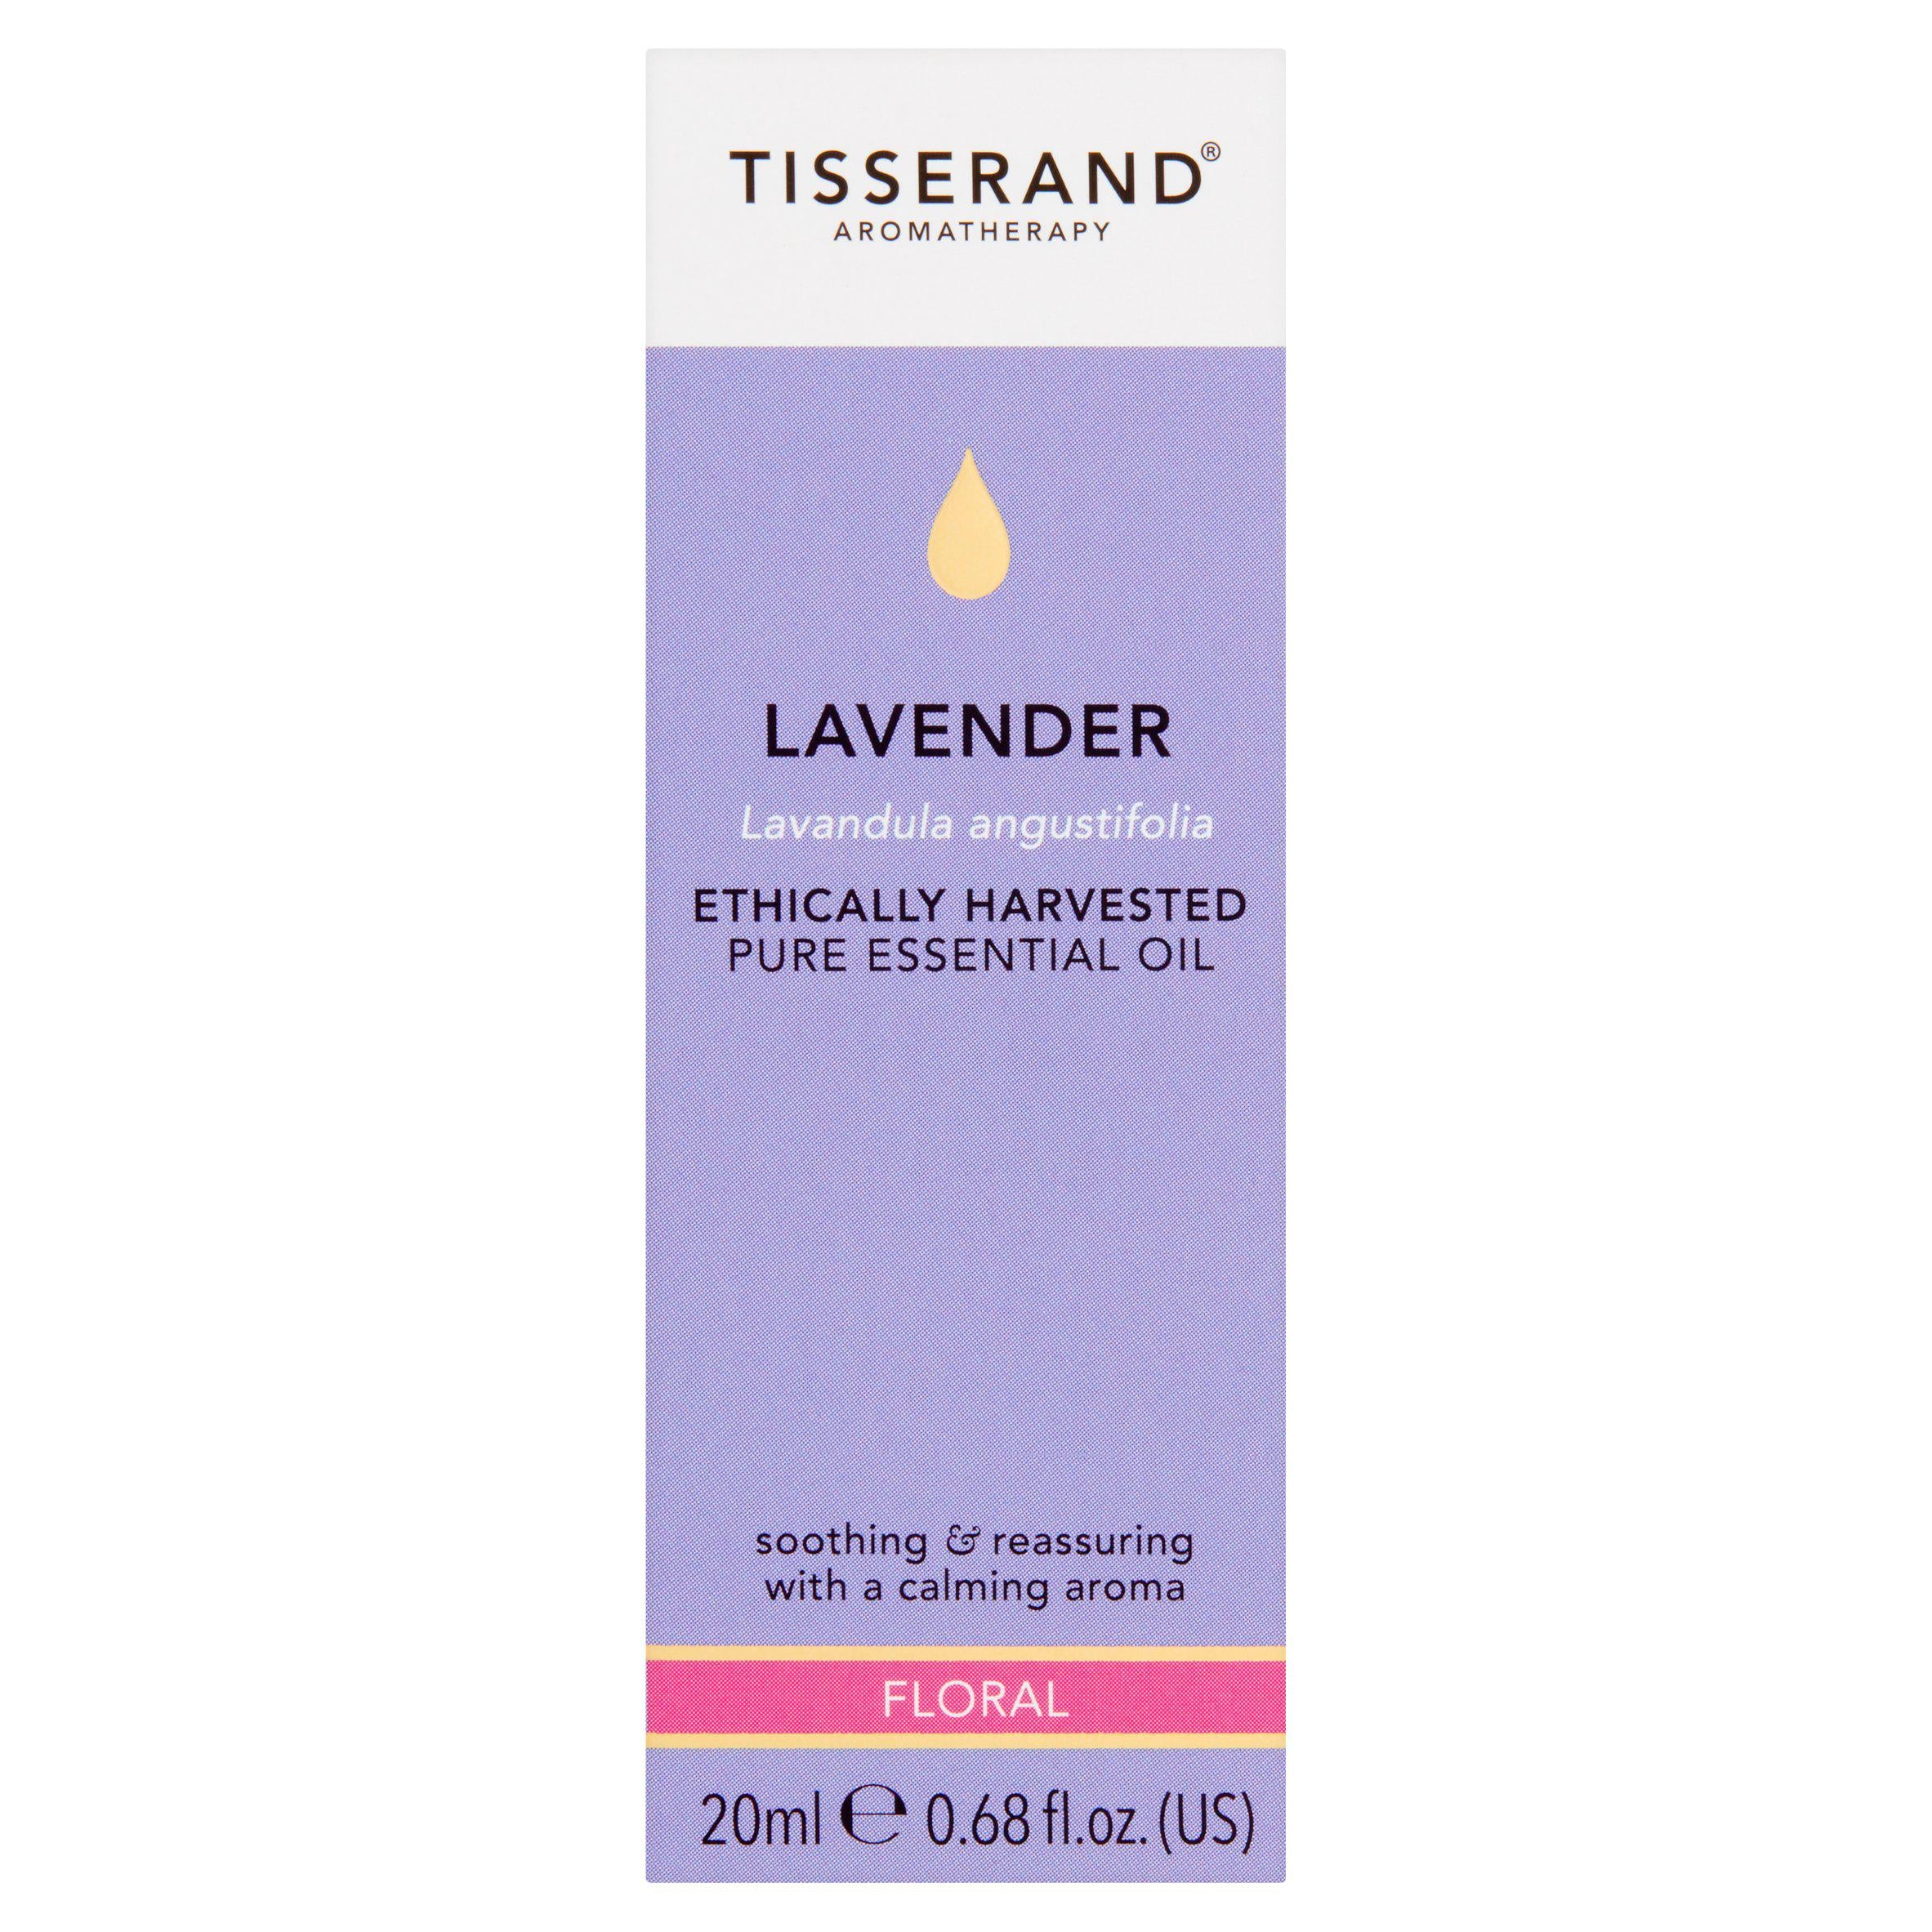 Tisserand Aromatherapy Lavender Floral Pure Essential Oil 20ml - McGrocer